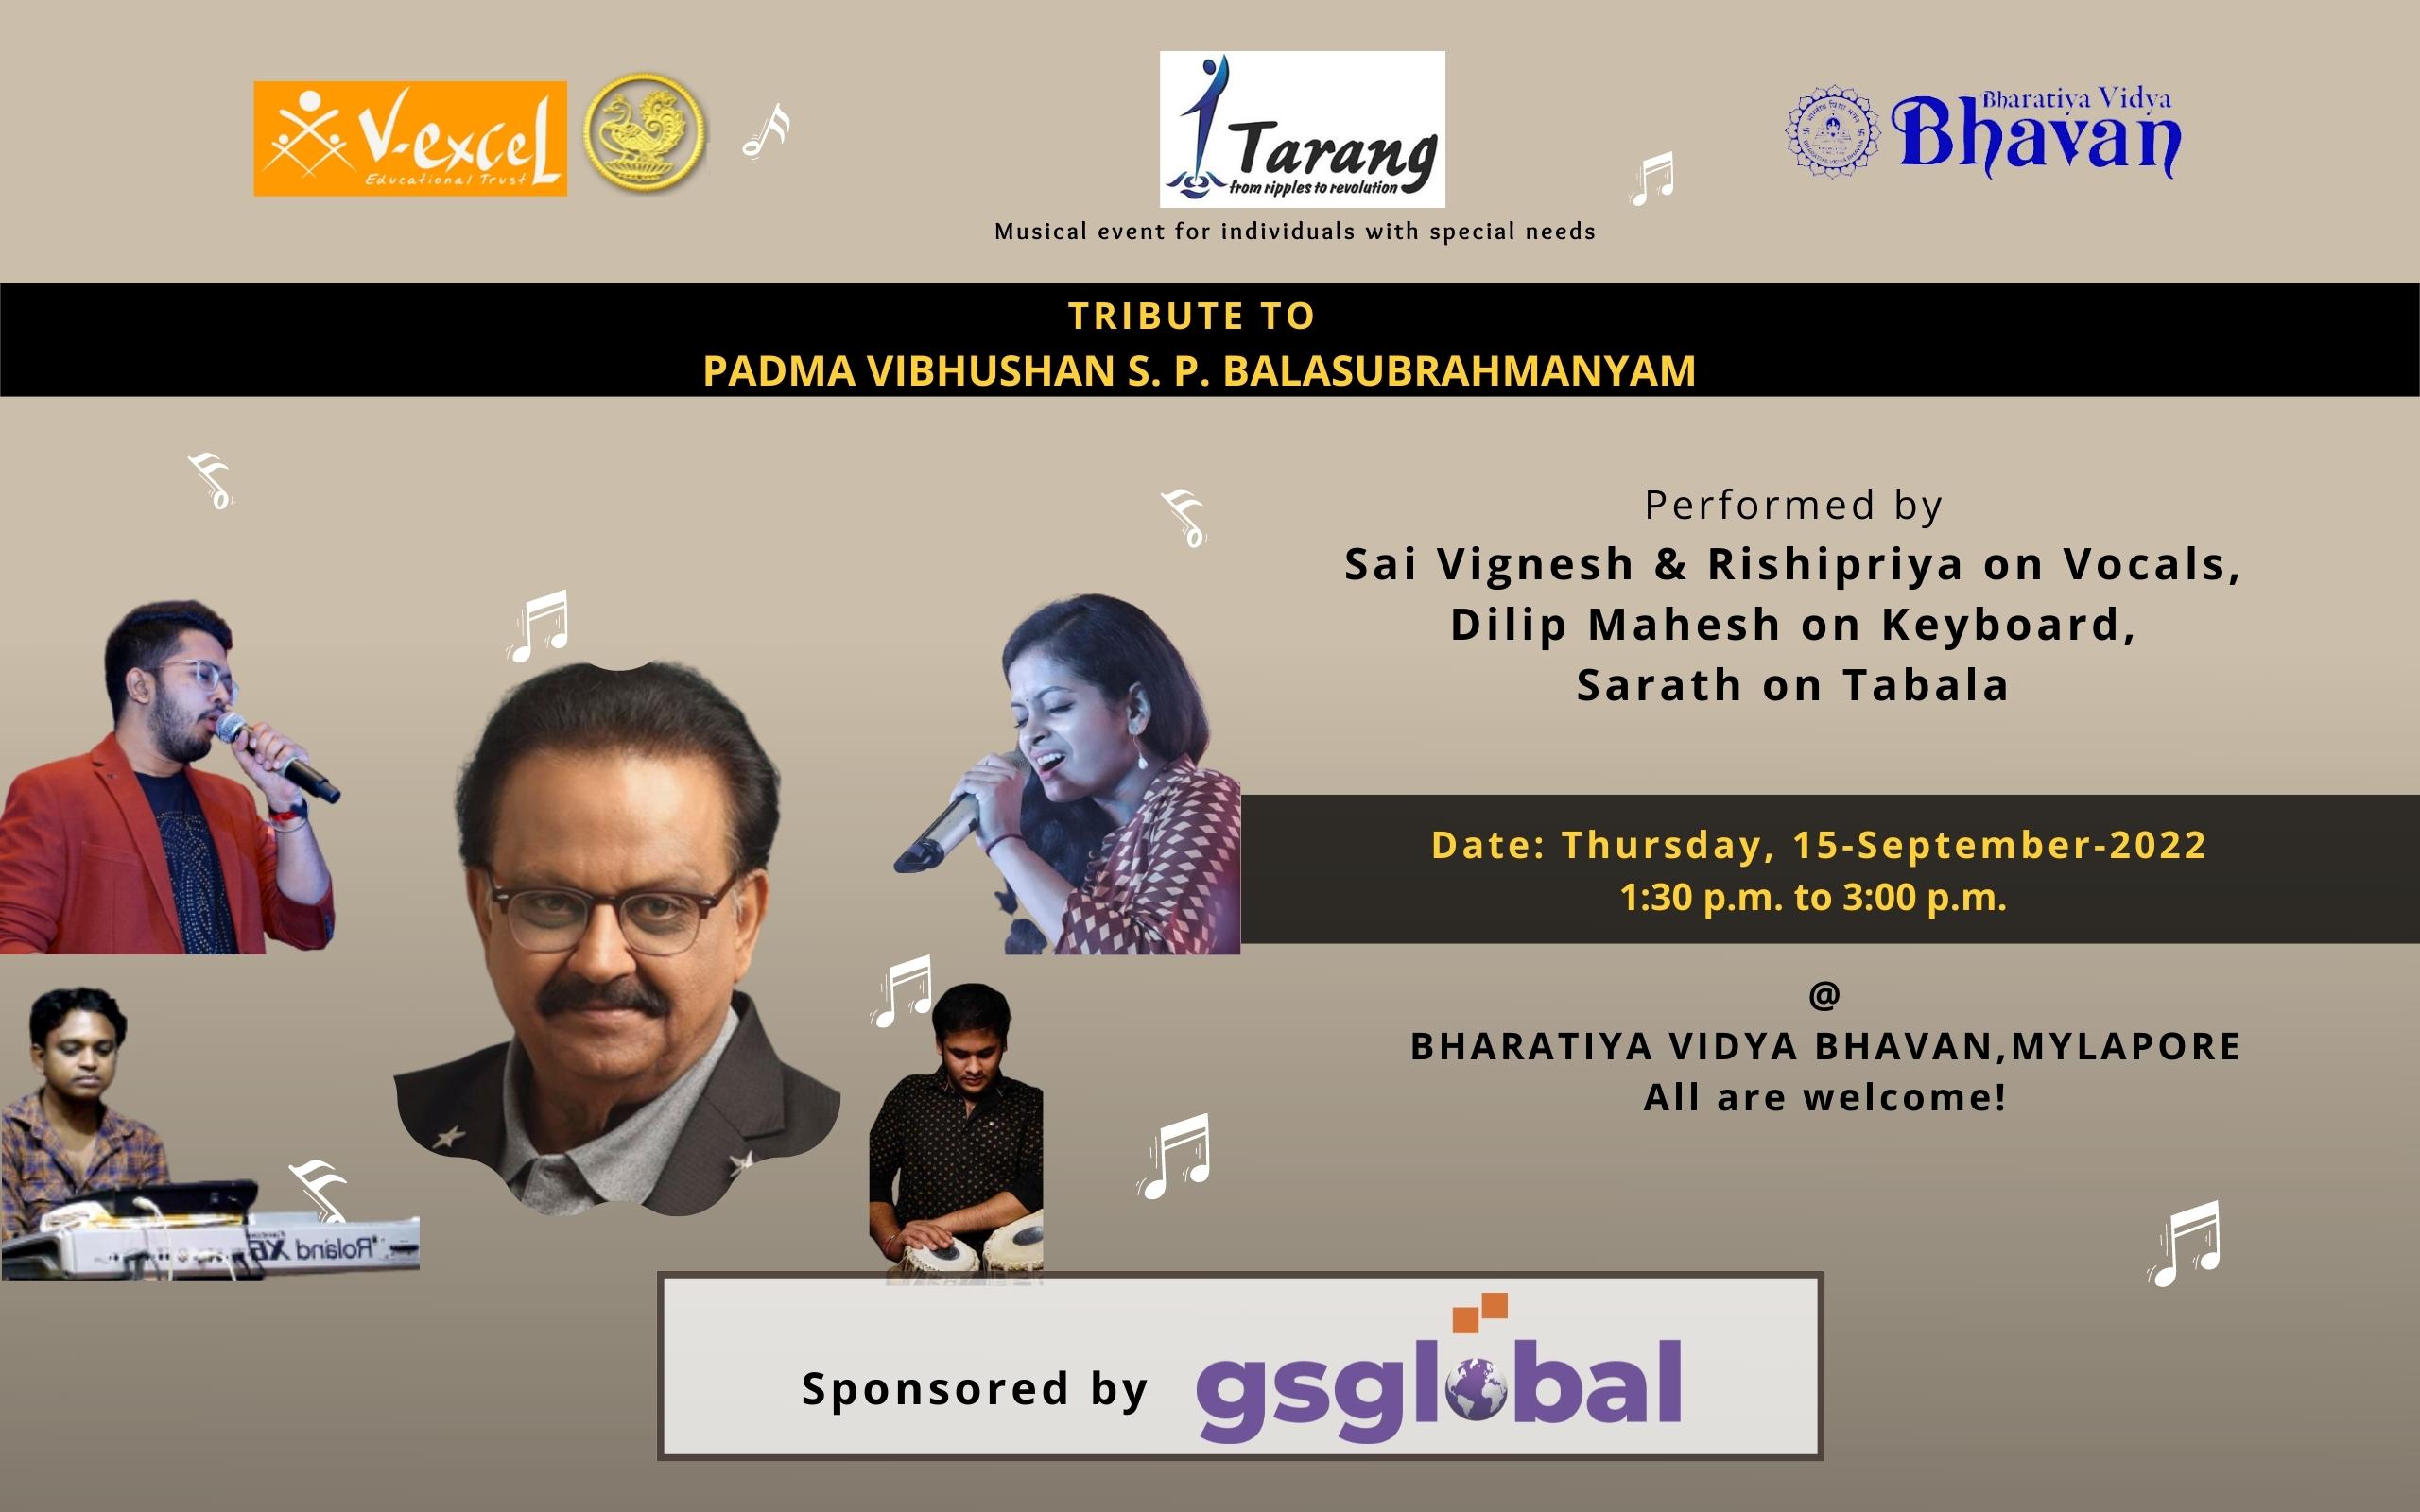 Performances by Sai Vignesh & Rishipriya on Vocals